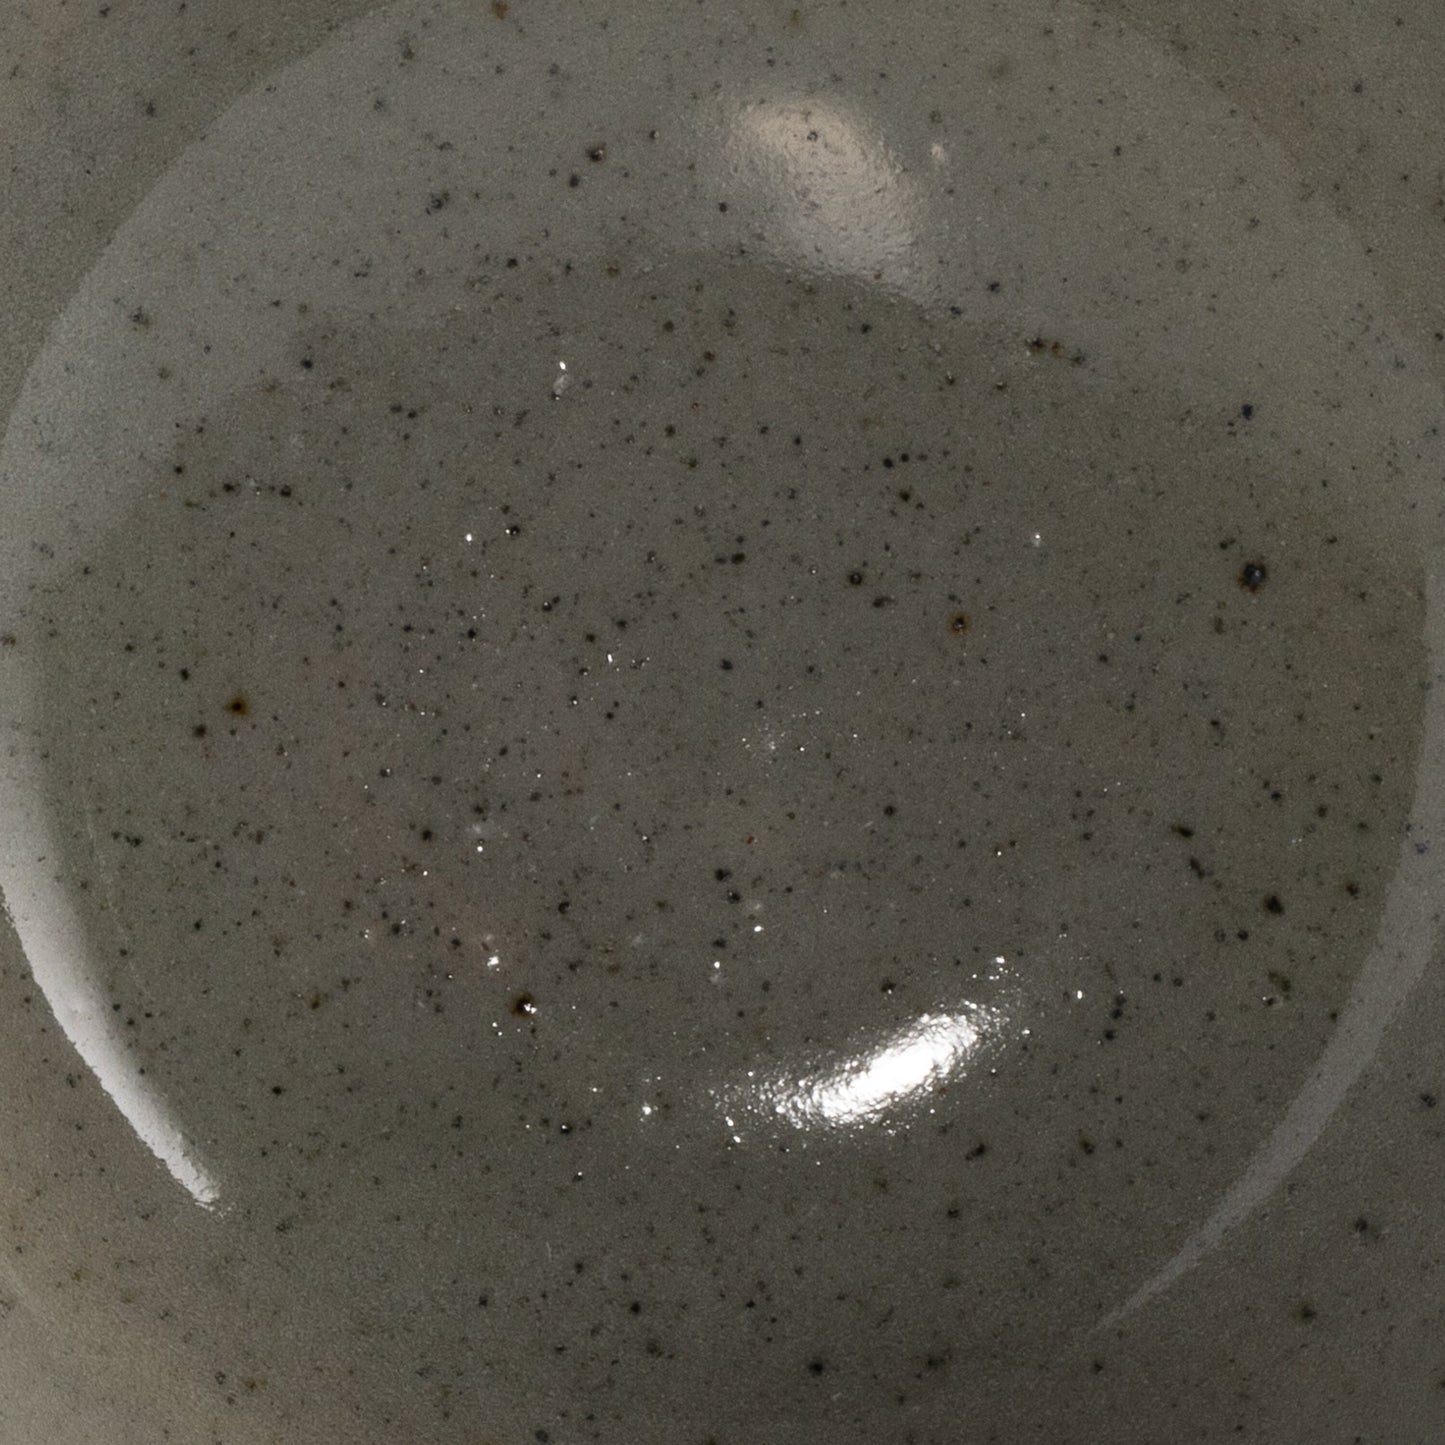 Nelo small bowl, set of 4-natural clay